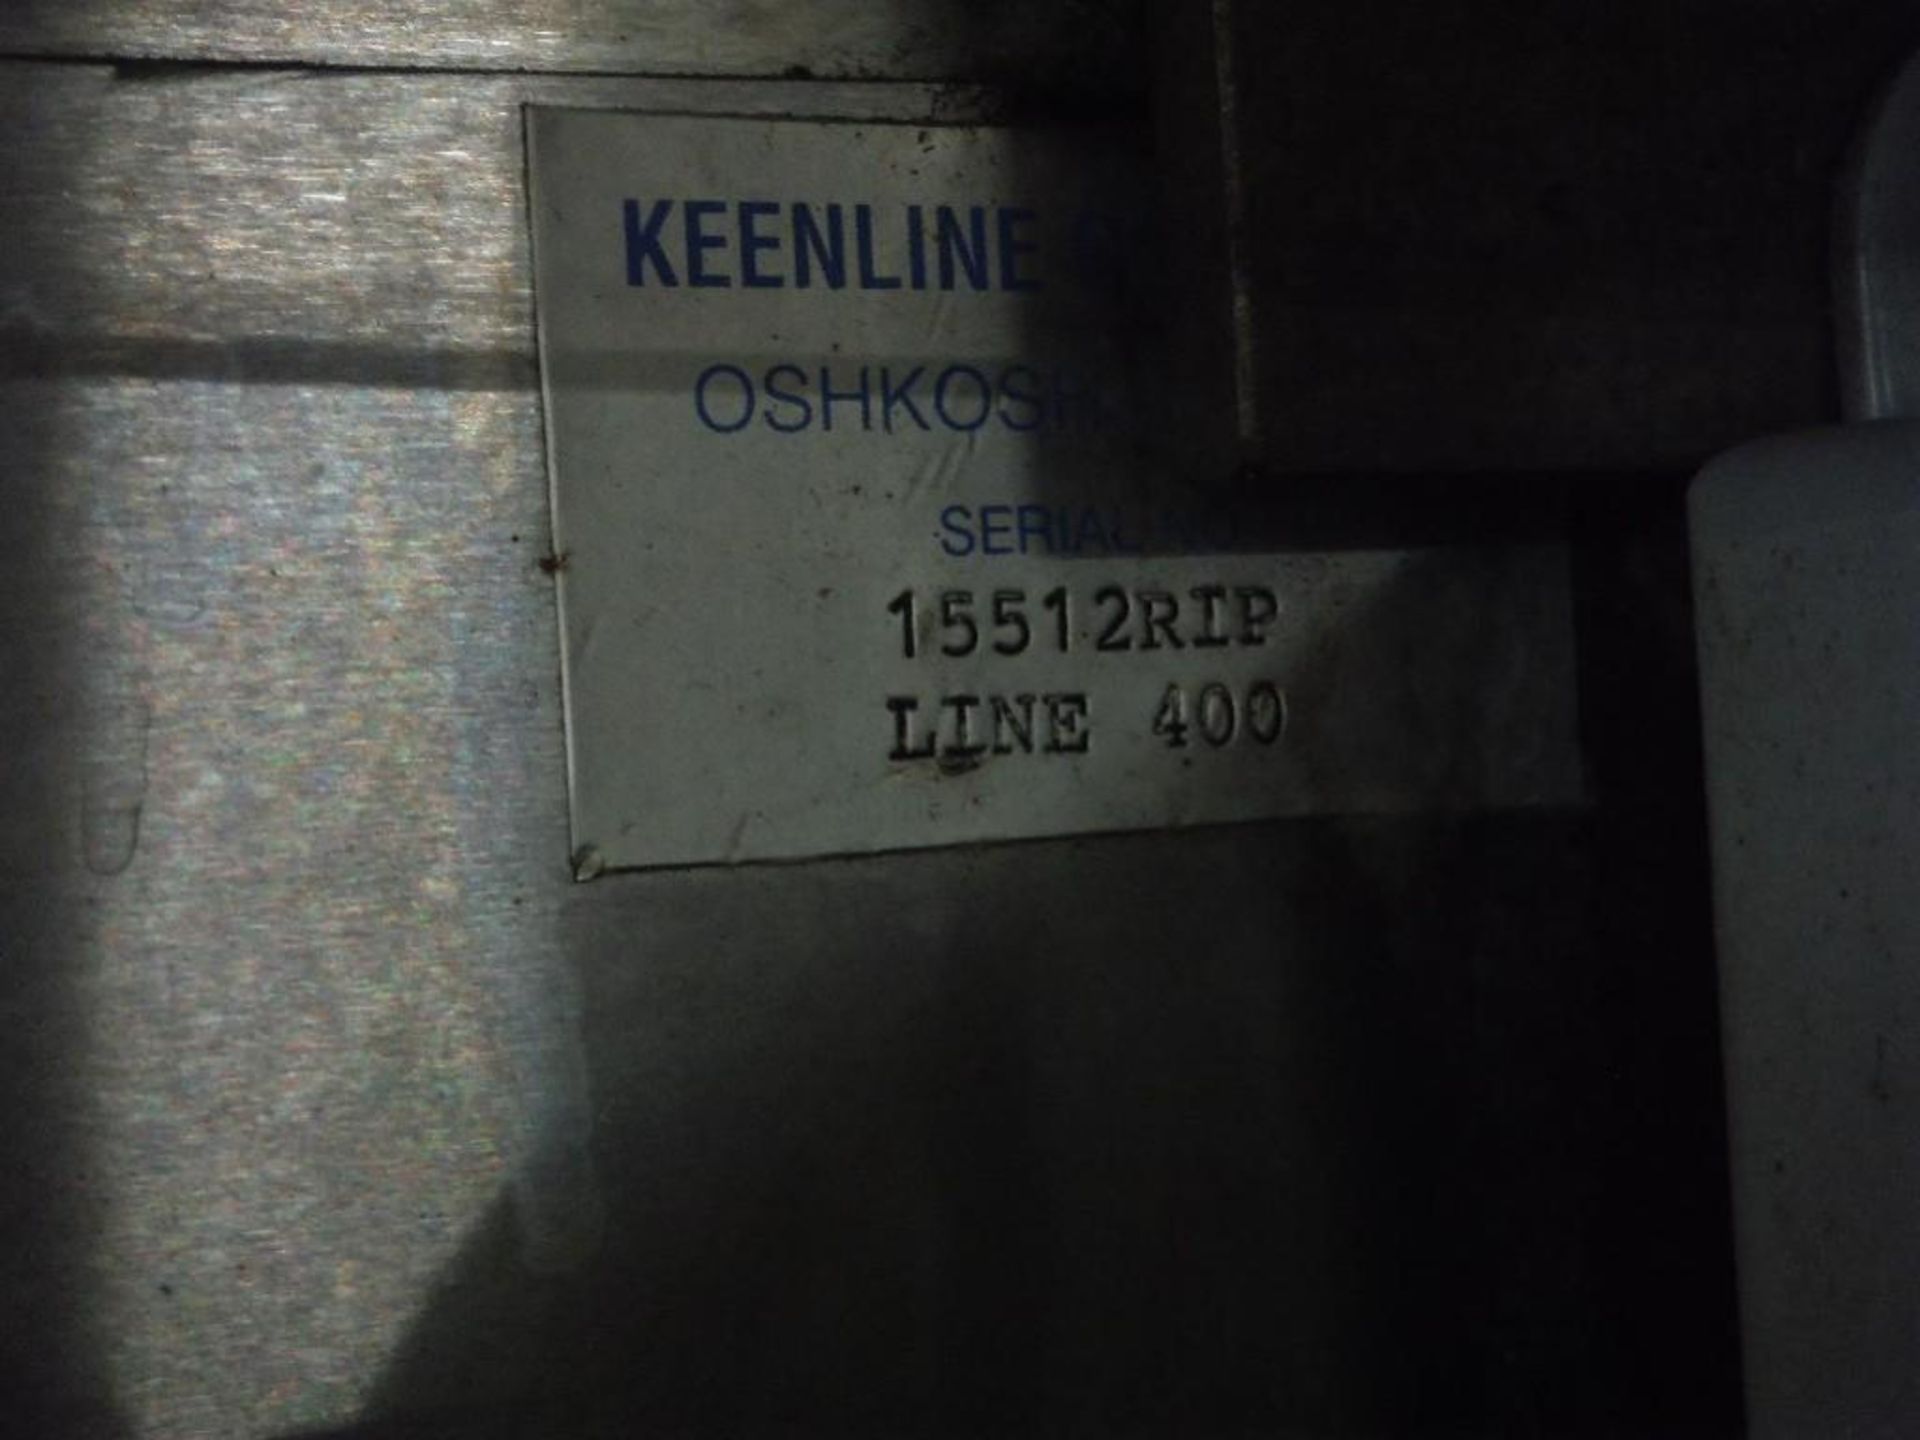 Keenline laning conveyor, 60 in. long x 26 in. wide - Rigging Fee: $150 - Image 6 of 6